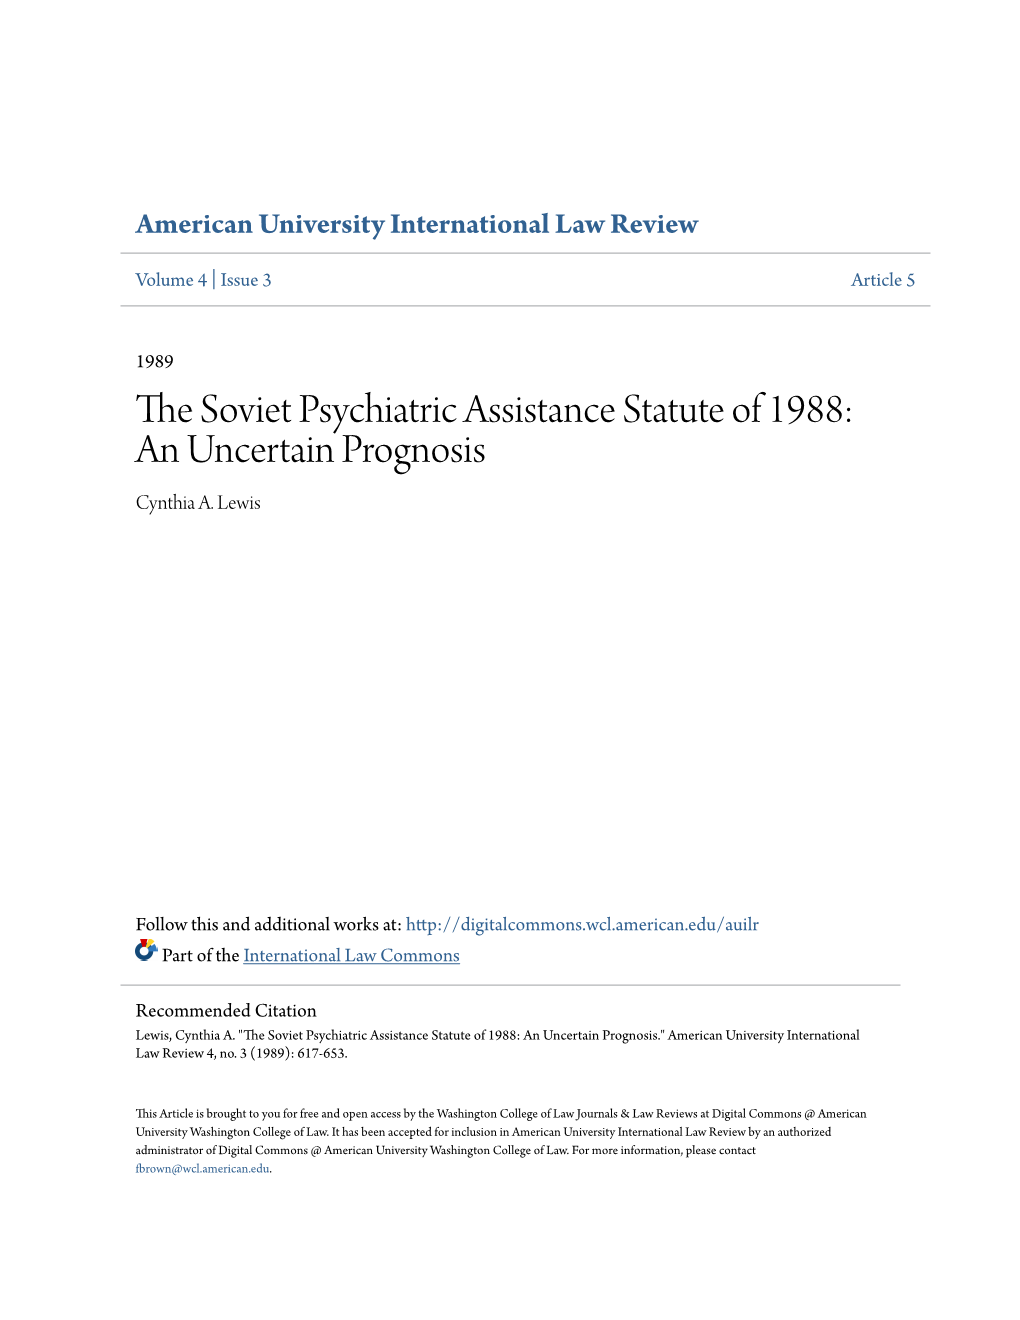 The Soviet Psychiatric Assistance Statute of 1988: an Uncertain Prognosis